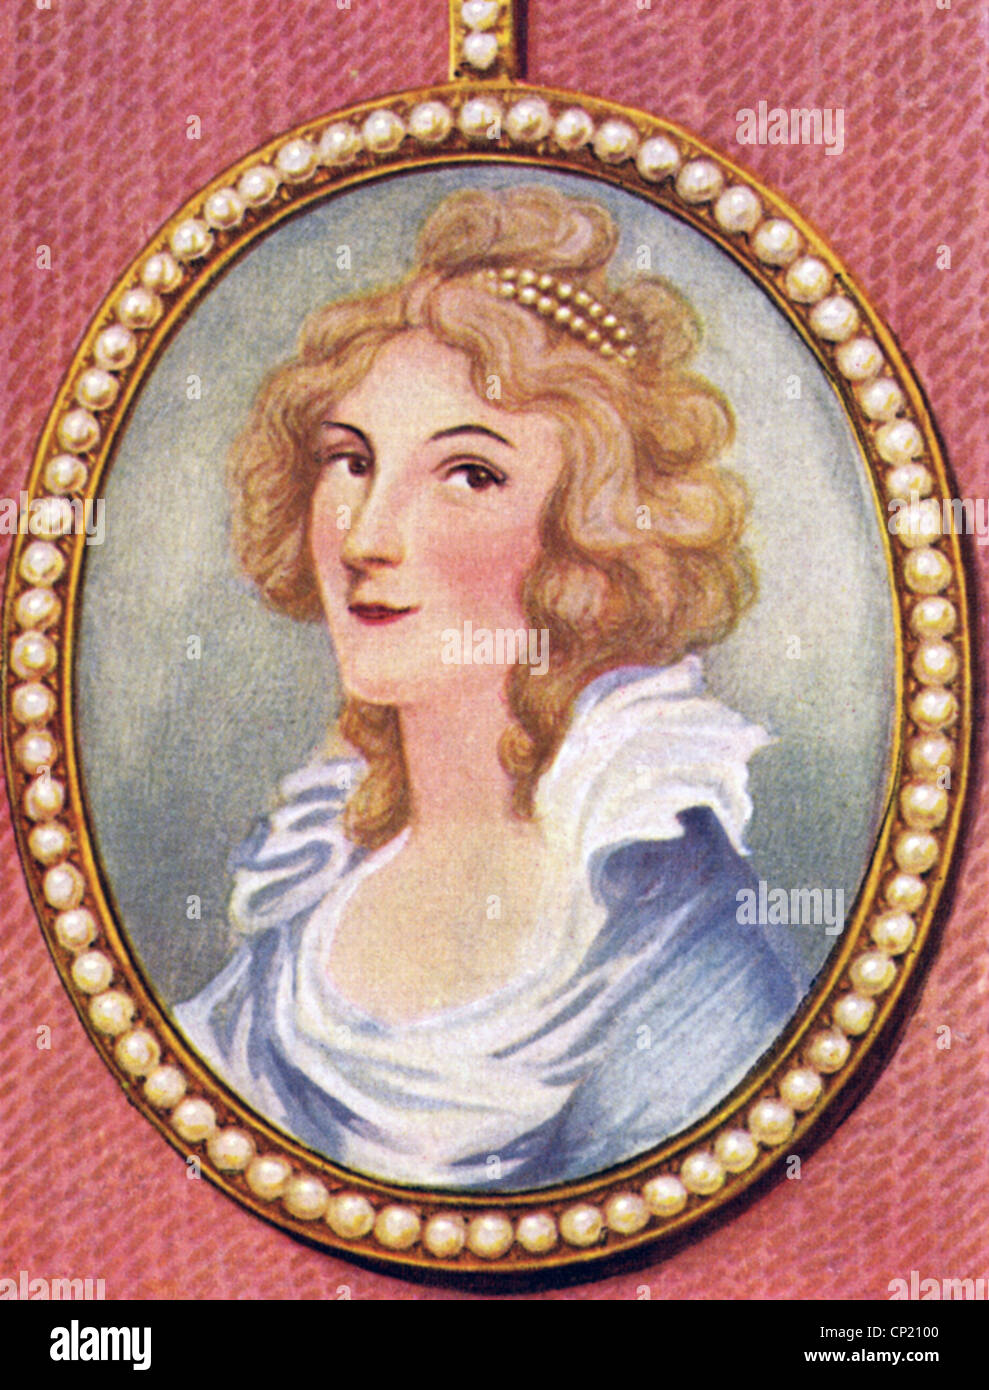 Cavendish, Elizabeth, 13.5.1759 - 30.3.1824, Duchess of Devonshire, portrait, colour printing after contemporary miniature, cigarette card, Germany, 1933, Stock Photo